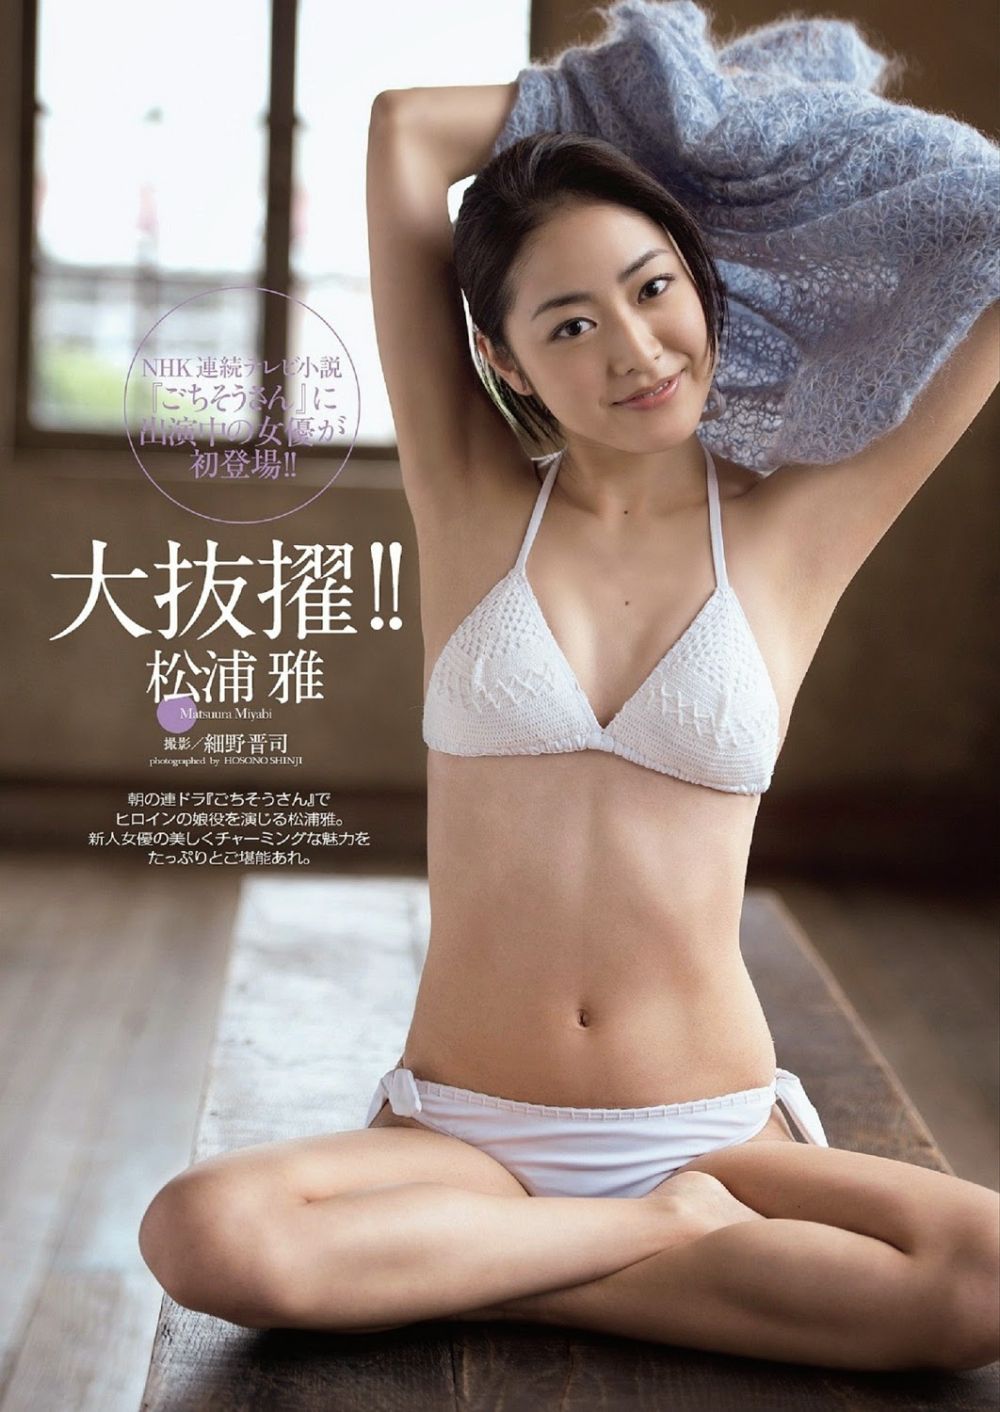 Miyabi Matsuura Sexy and Hottest Photos , Latest Pics